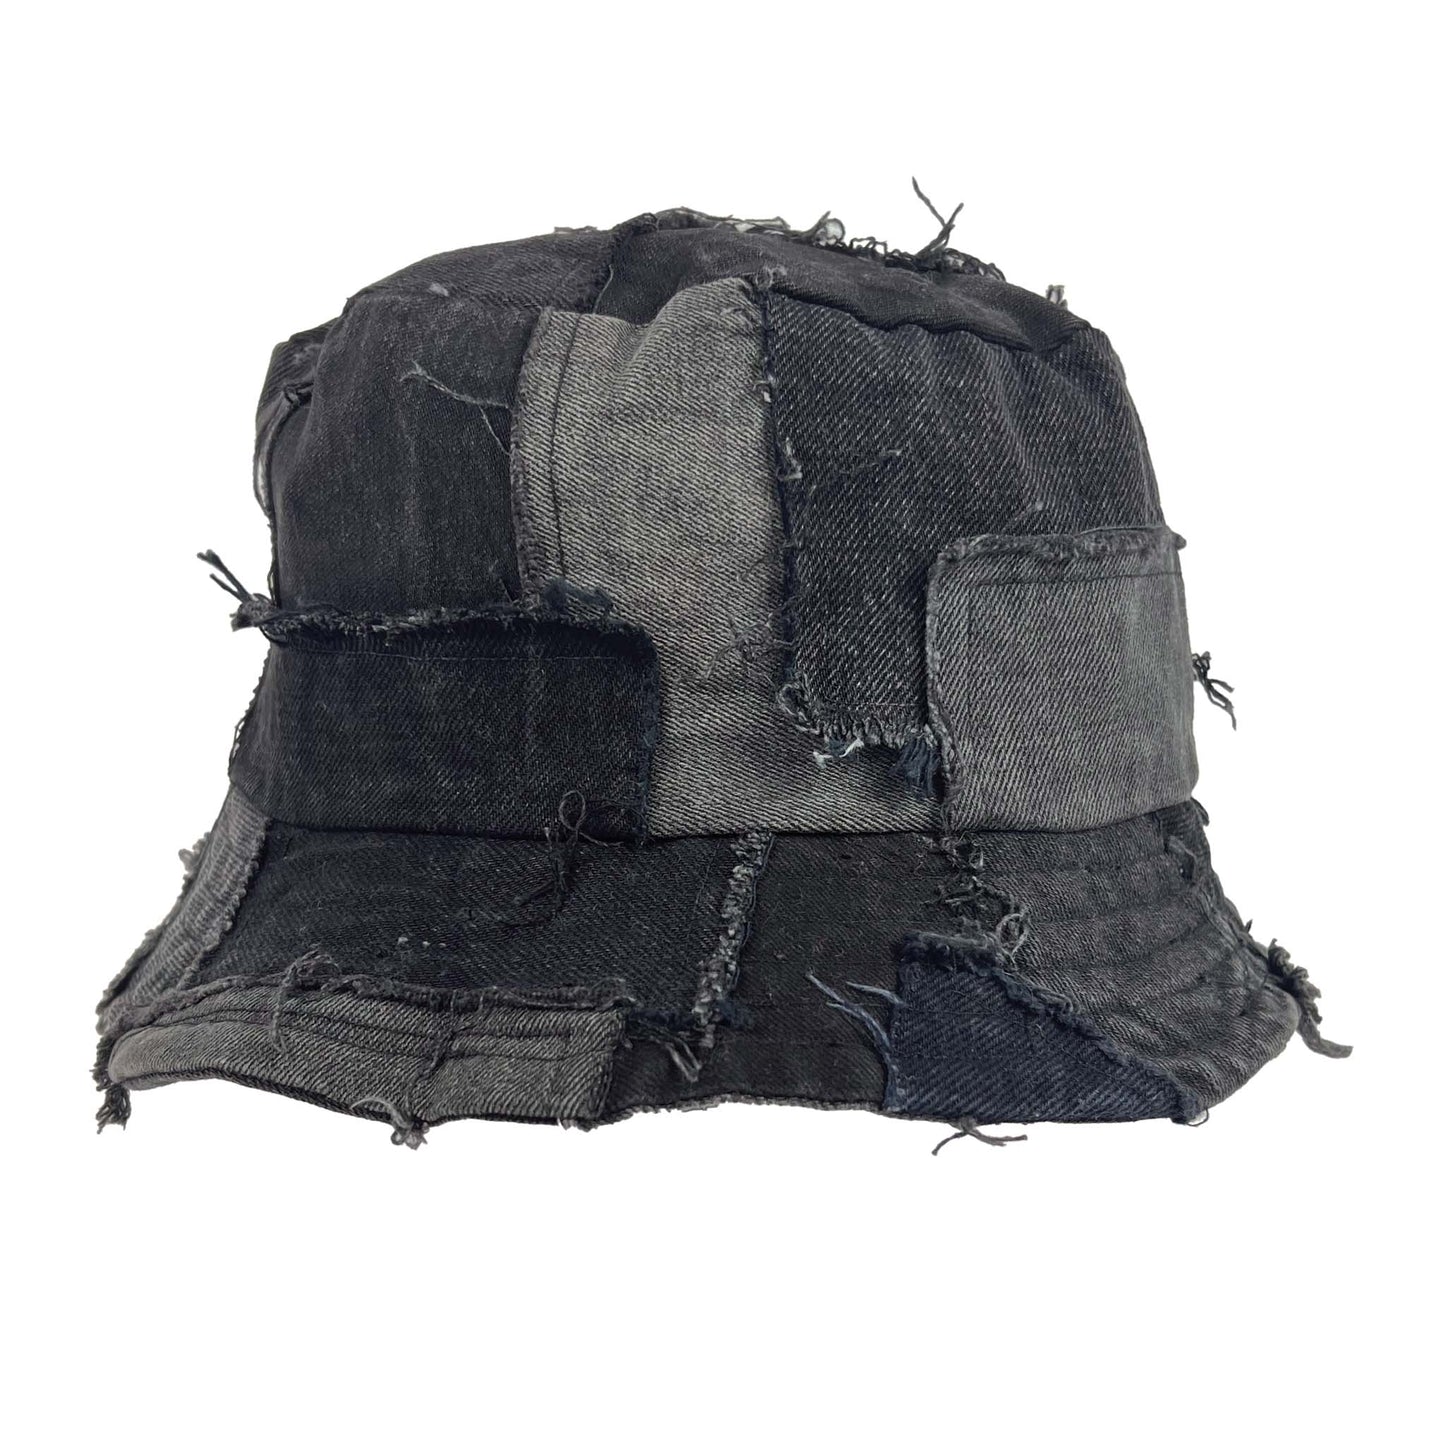 Patched Big Bucket Hat Black/Grey